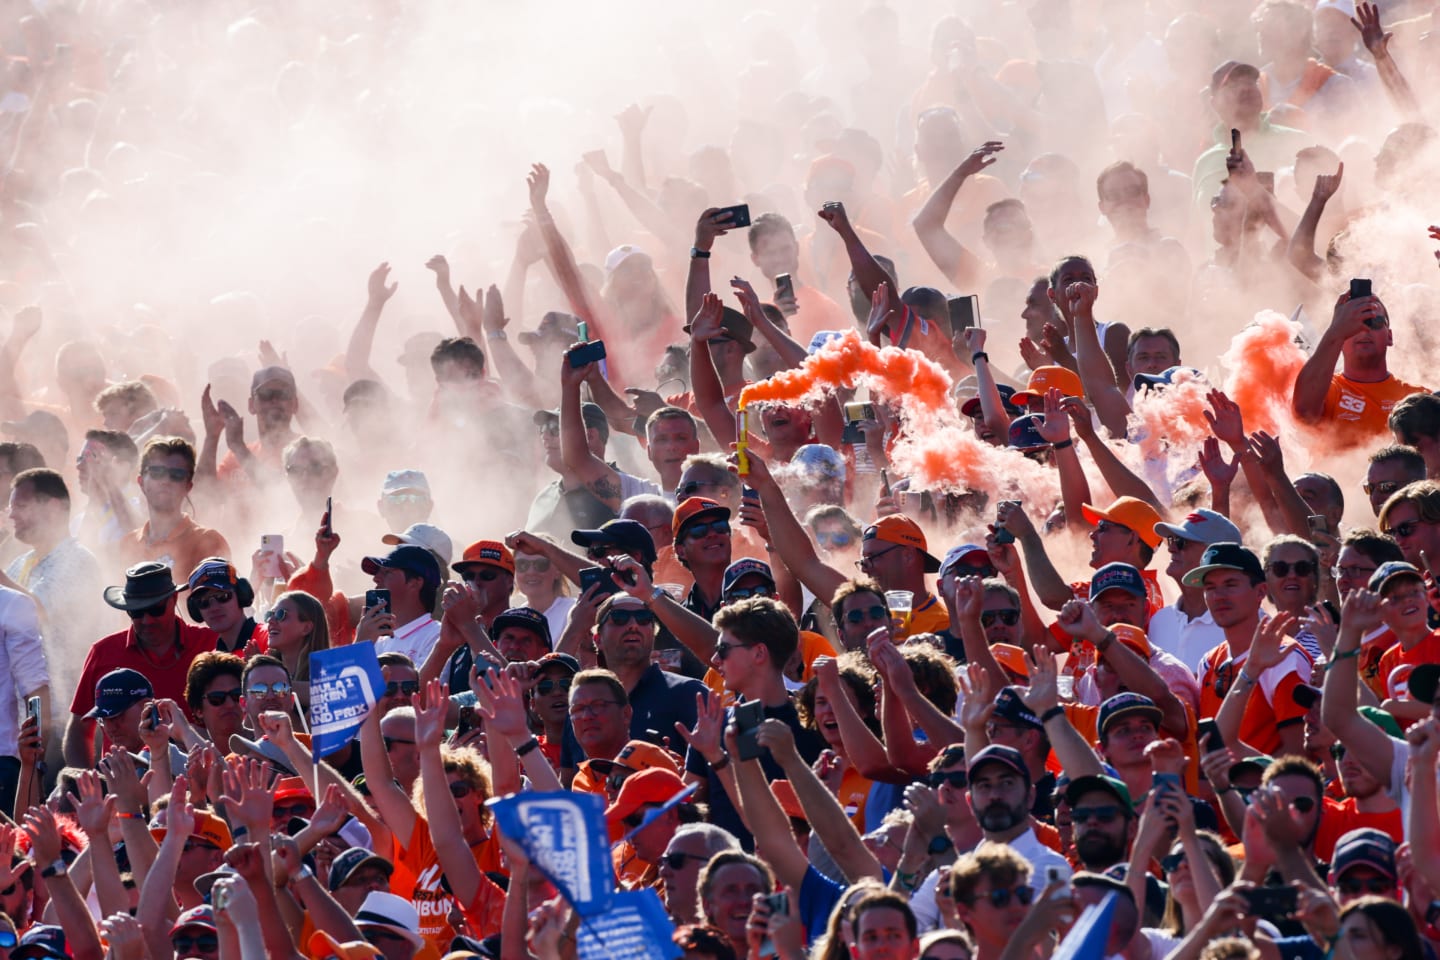 ZANDVOORT, NETHERLANDS - SEPTEMBER 05: Max Verstappen of Red Bull Racing and The Netherlands fans